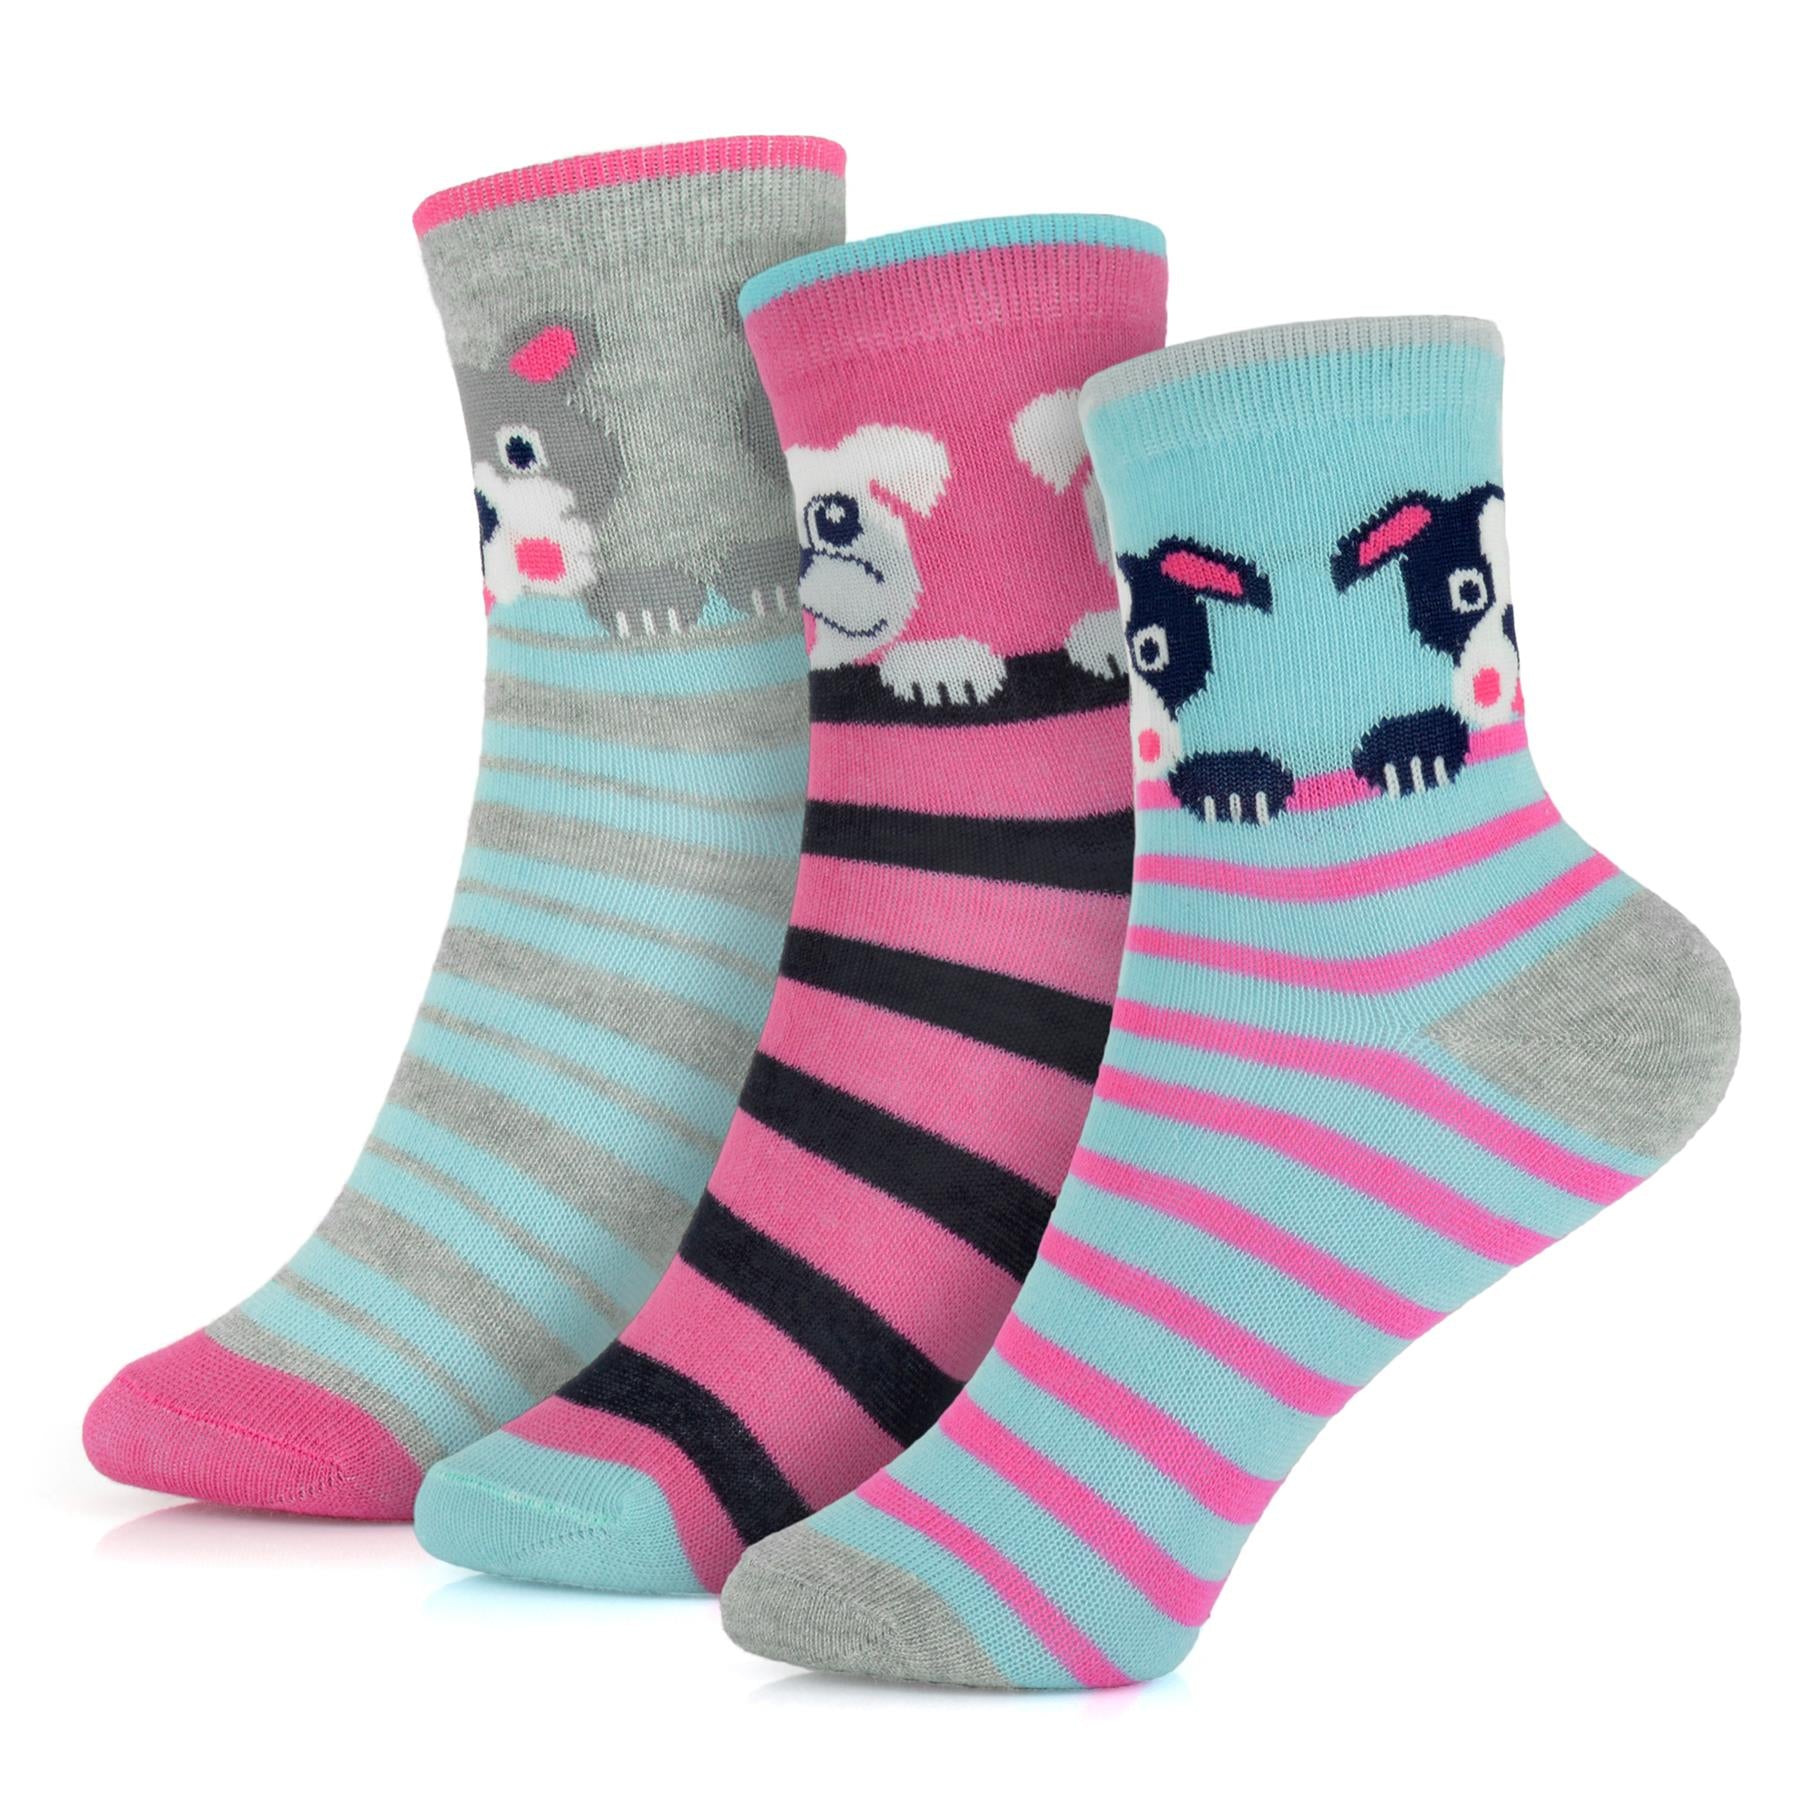 Kids Girls Cotton Rich Dog and Fruit Print Soft Pack of 3 Socks Striped Socks